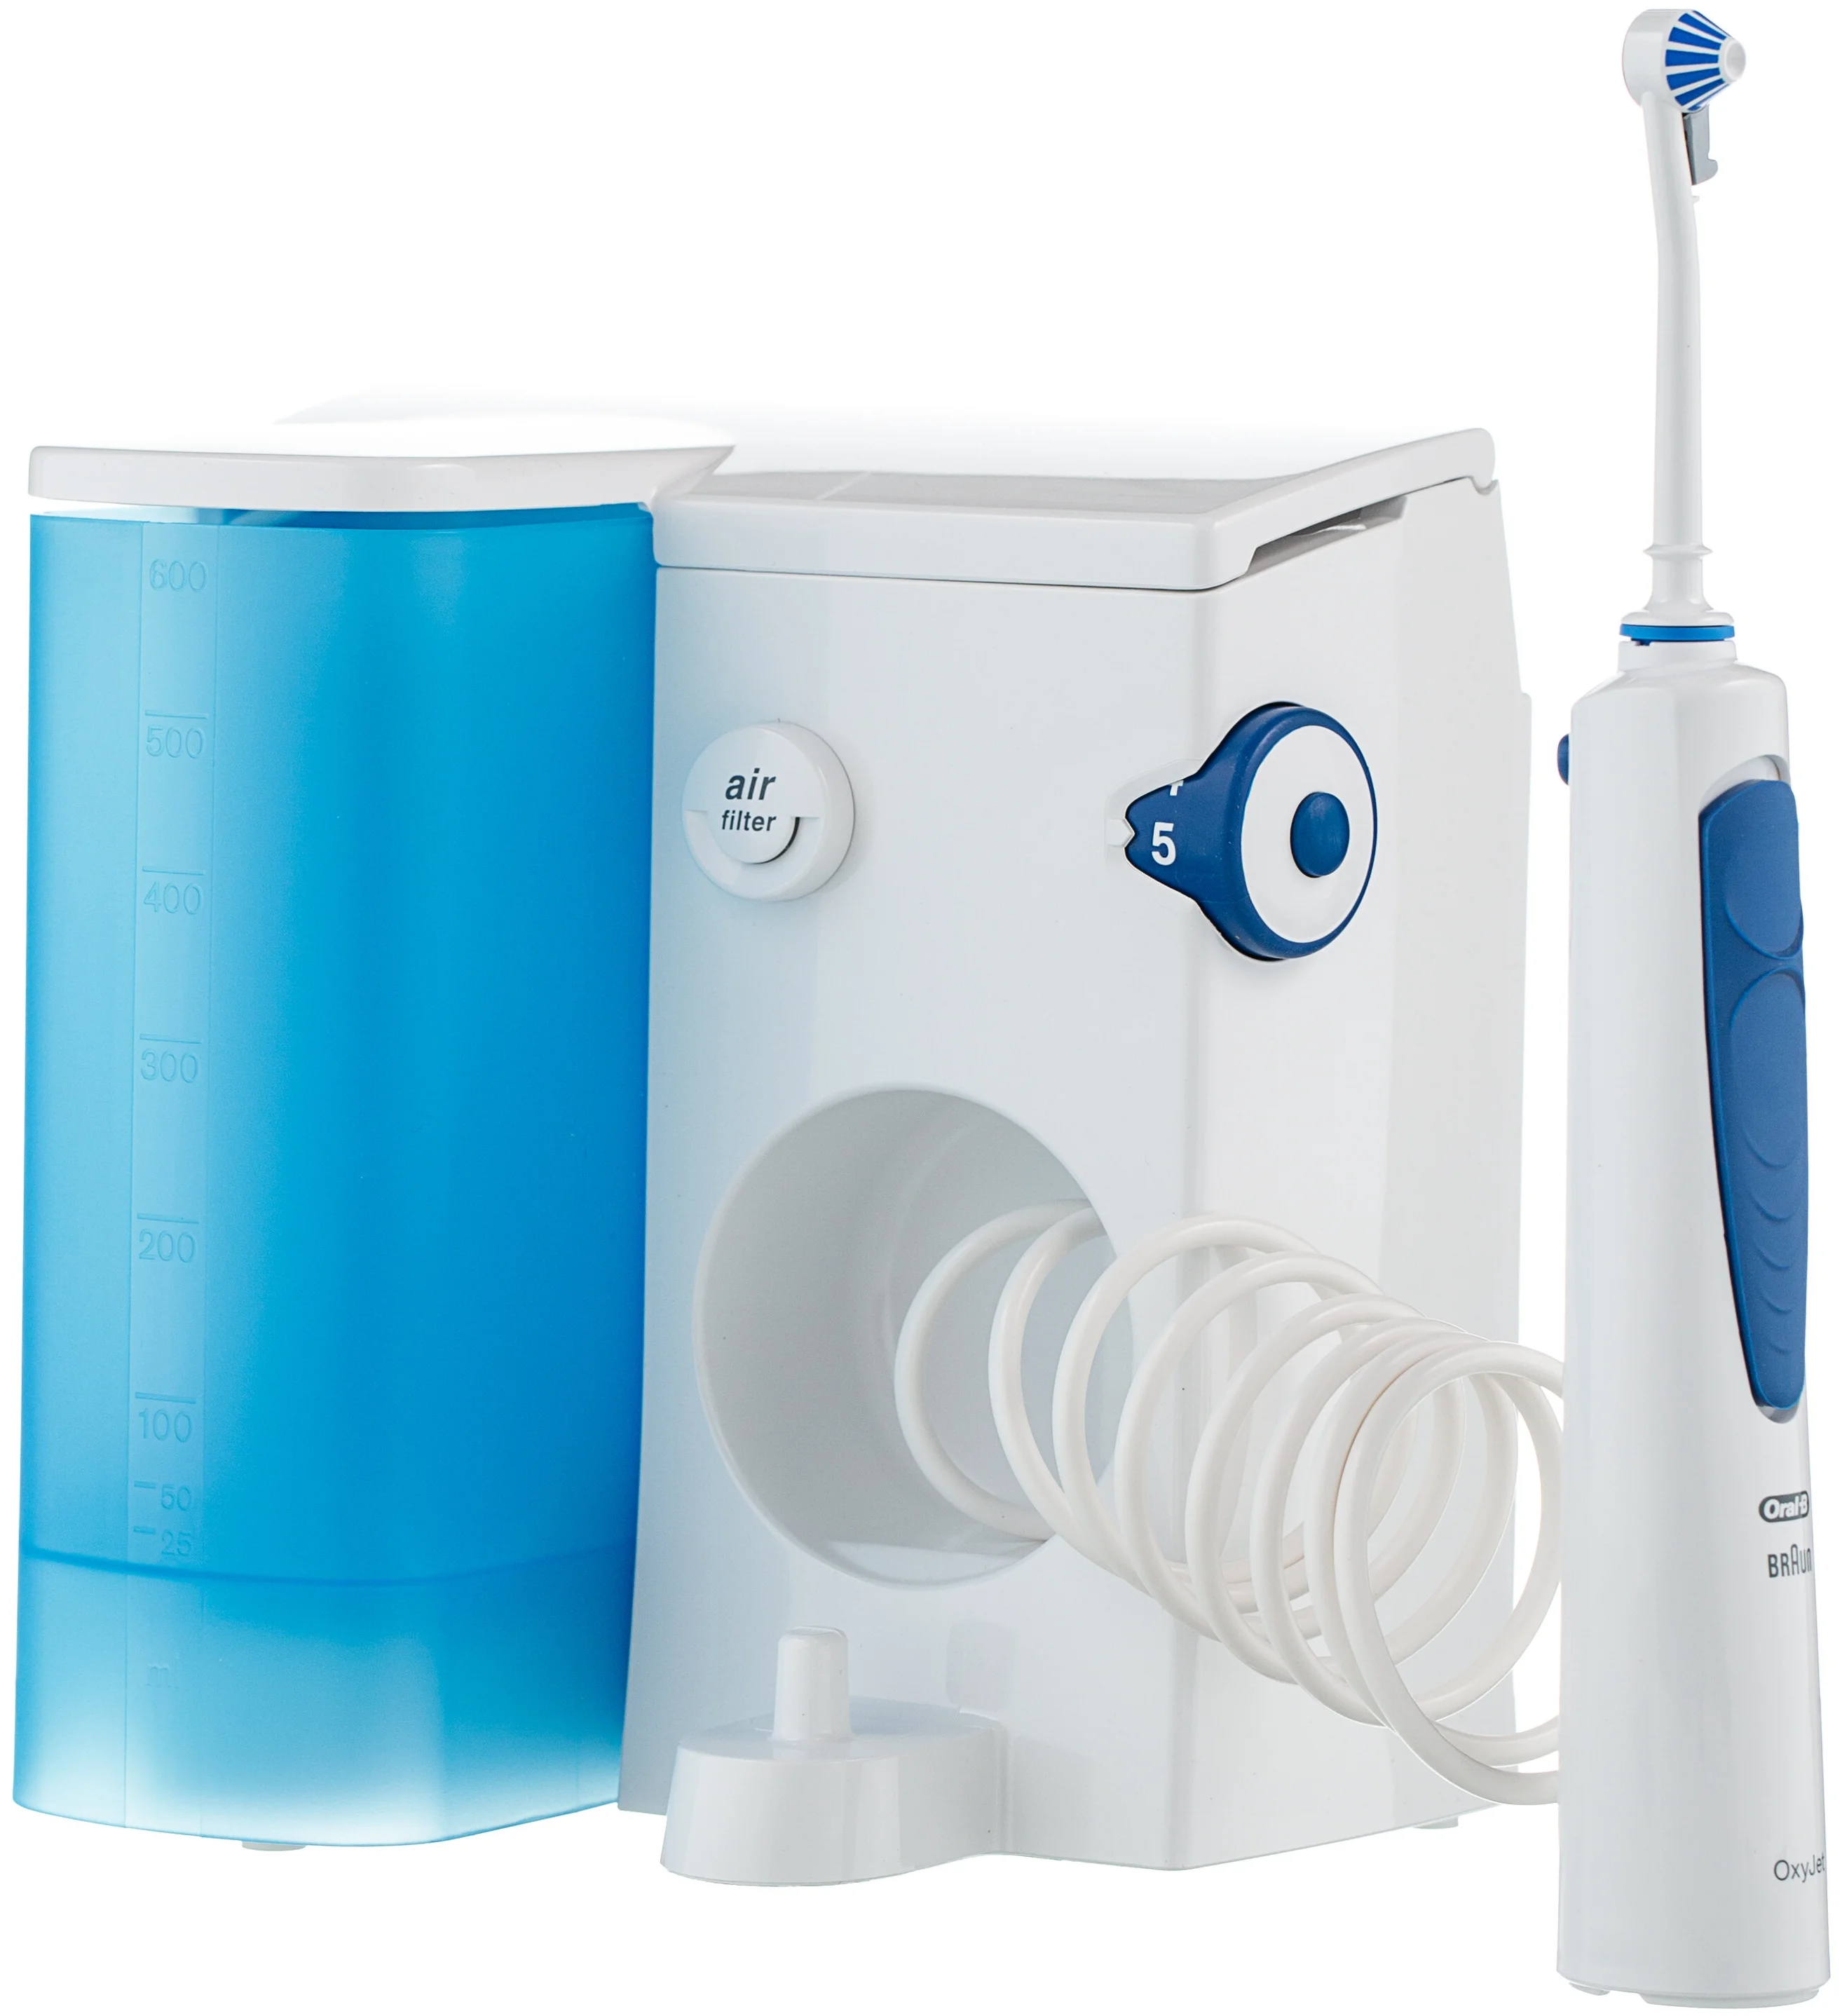 Oral-B Professional Care OxyJet MD20 - частота пульсации воды: 1350 импульсов/мин